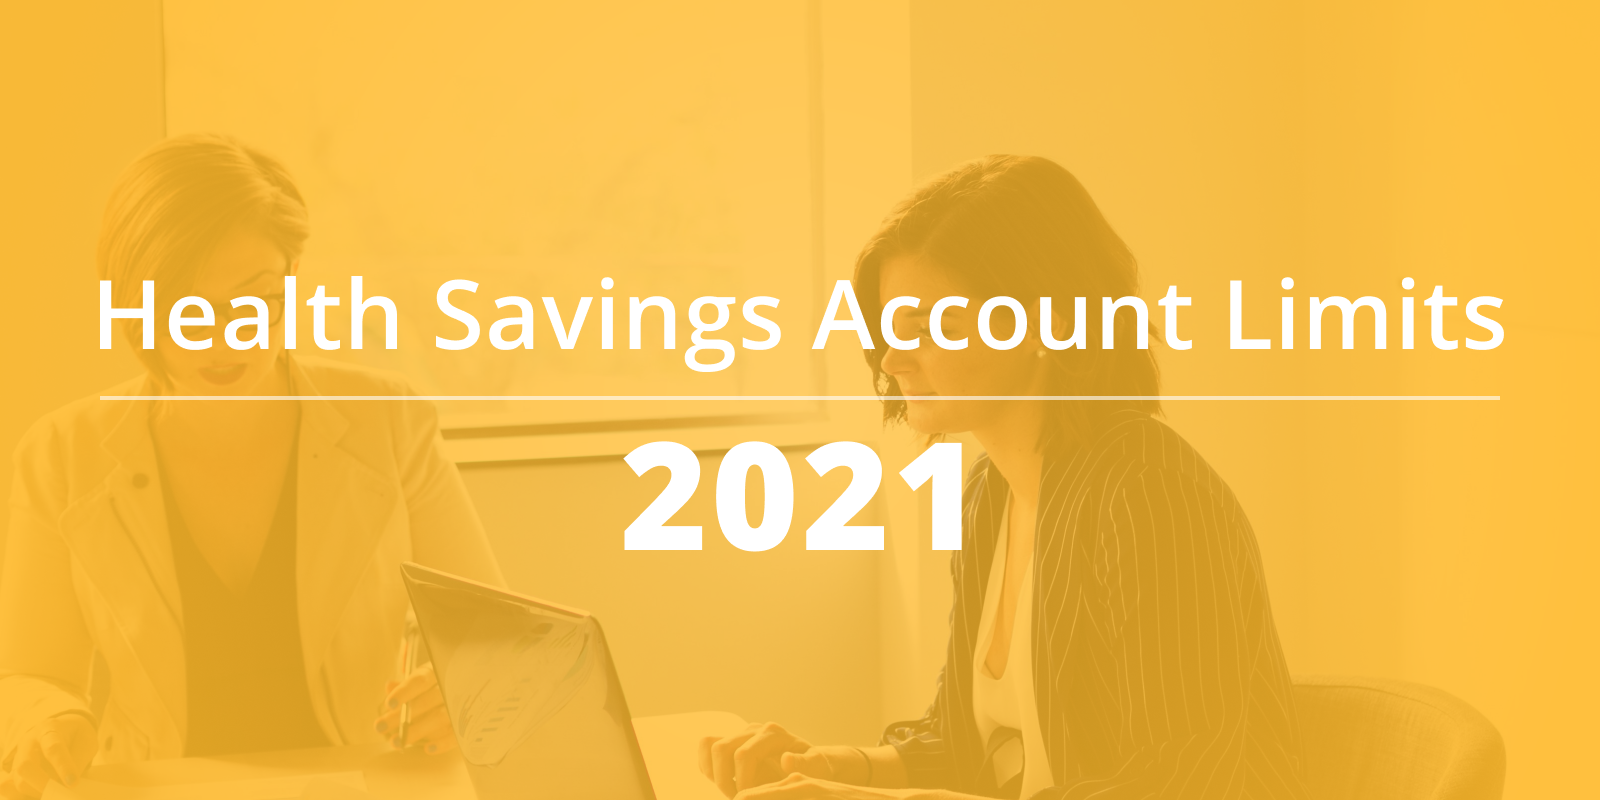 Health Savings Account Limits in 2021